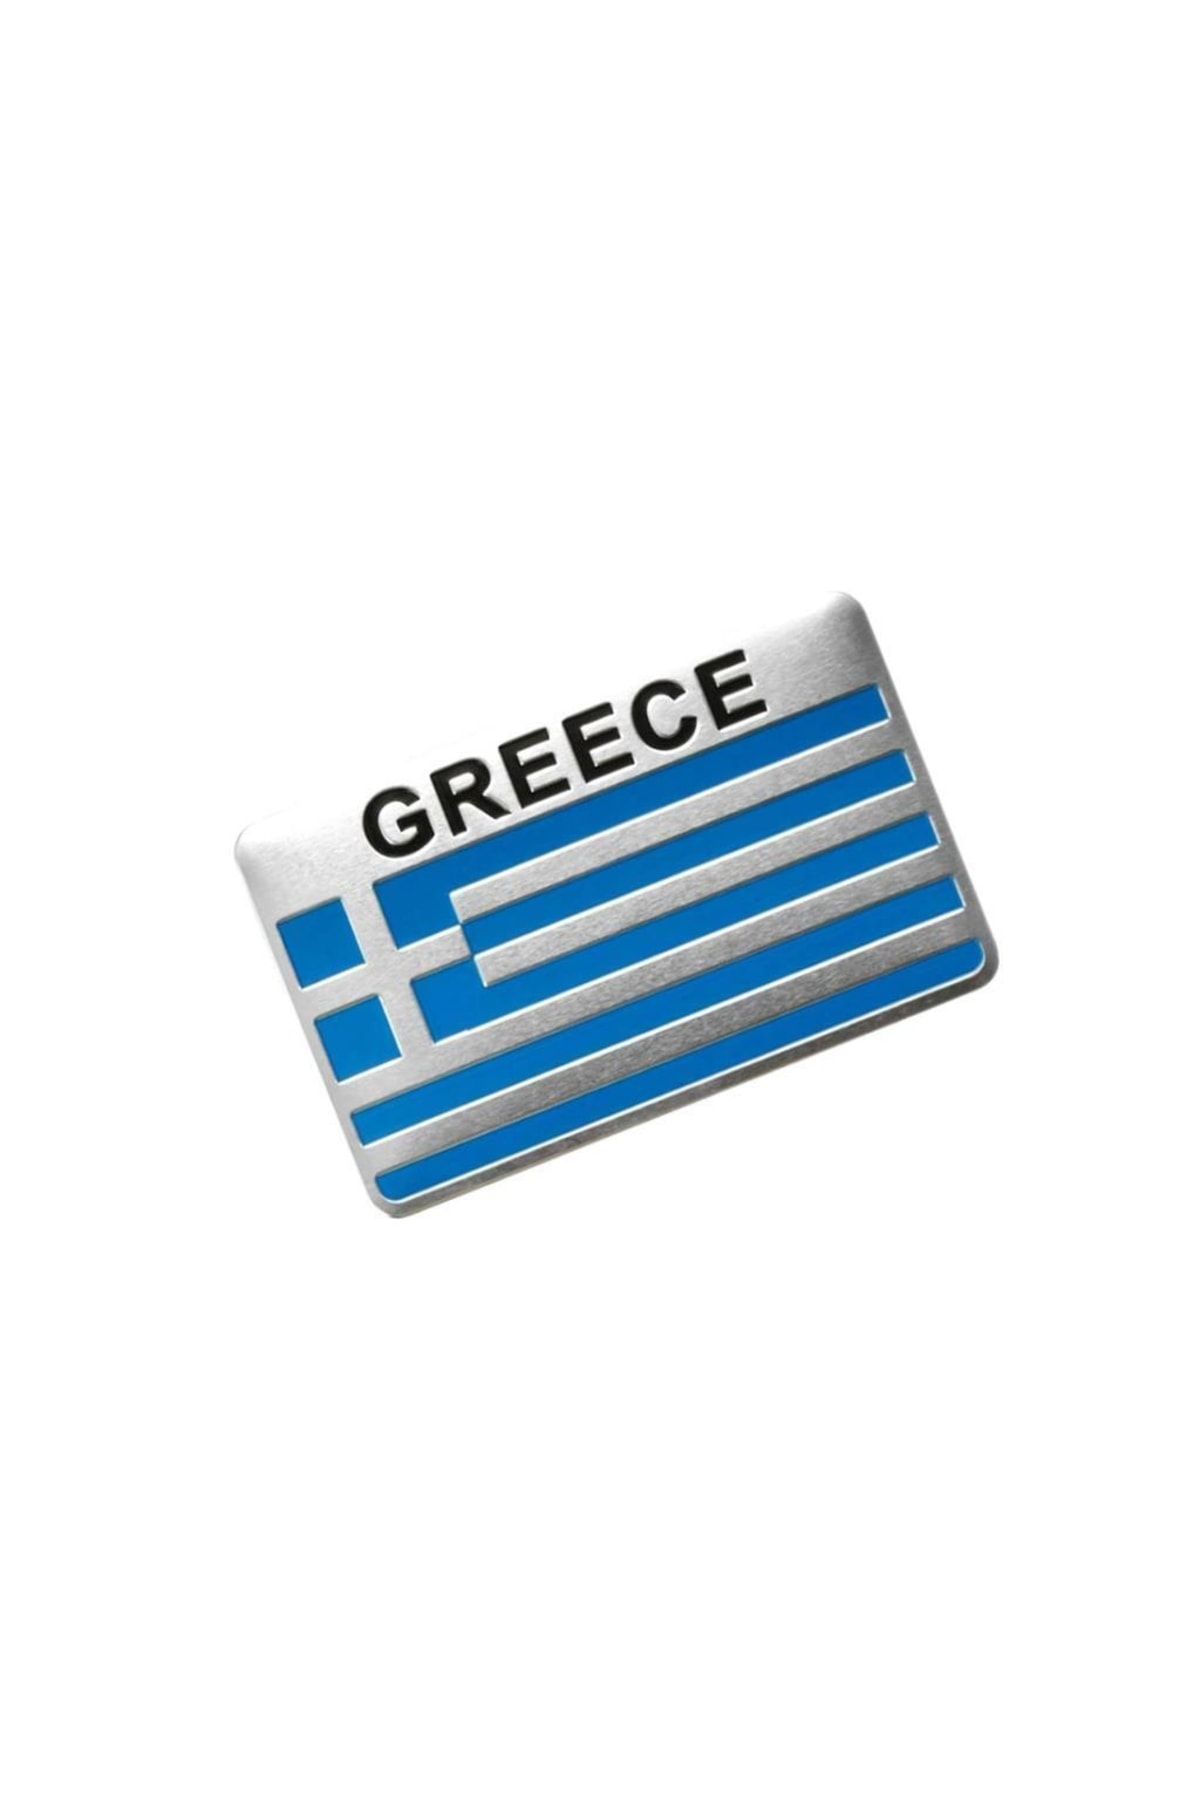 Knmaster Yunanistan Bayrağı Tasarımlı Alüminyum Sticker Etiket